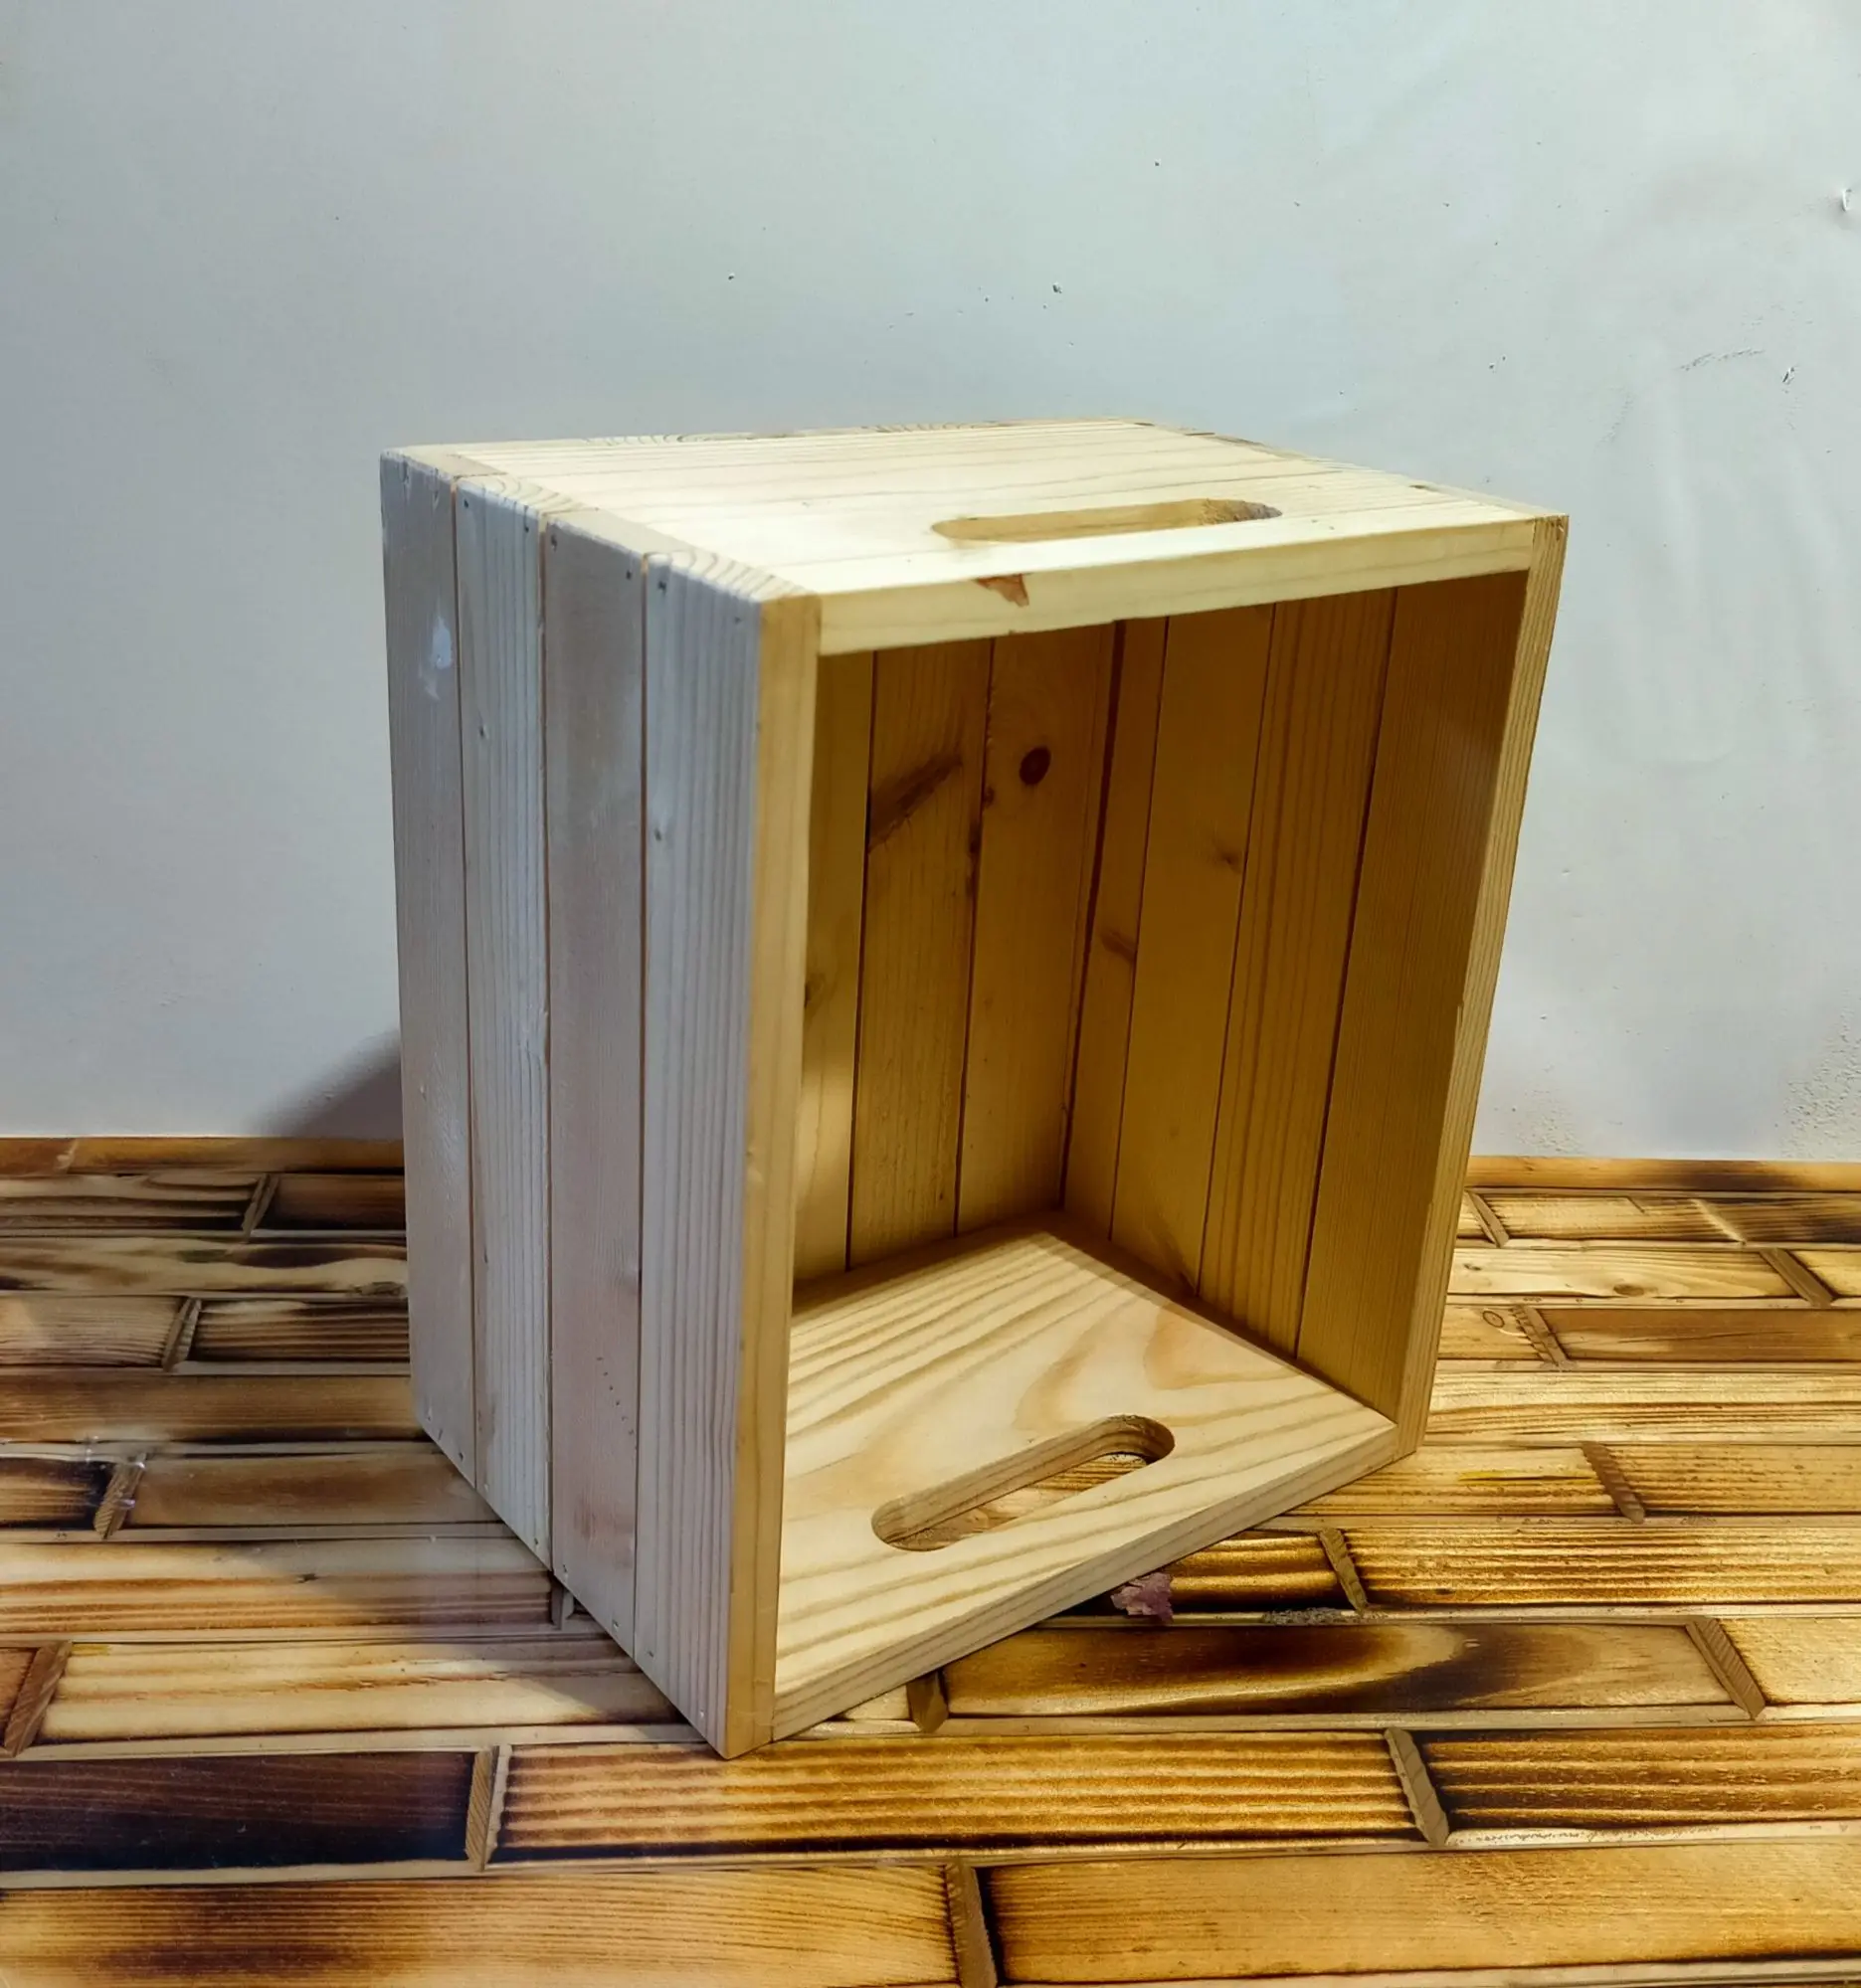 Wooden Crate Box (small)Organizer Container Storage Bin